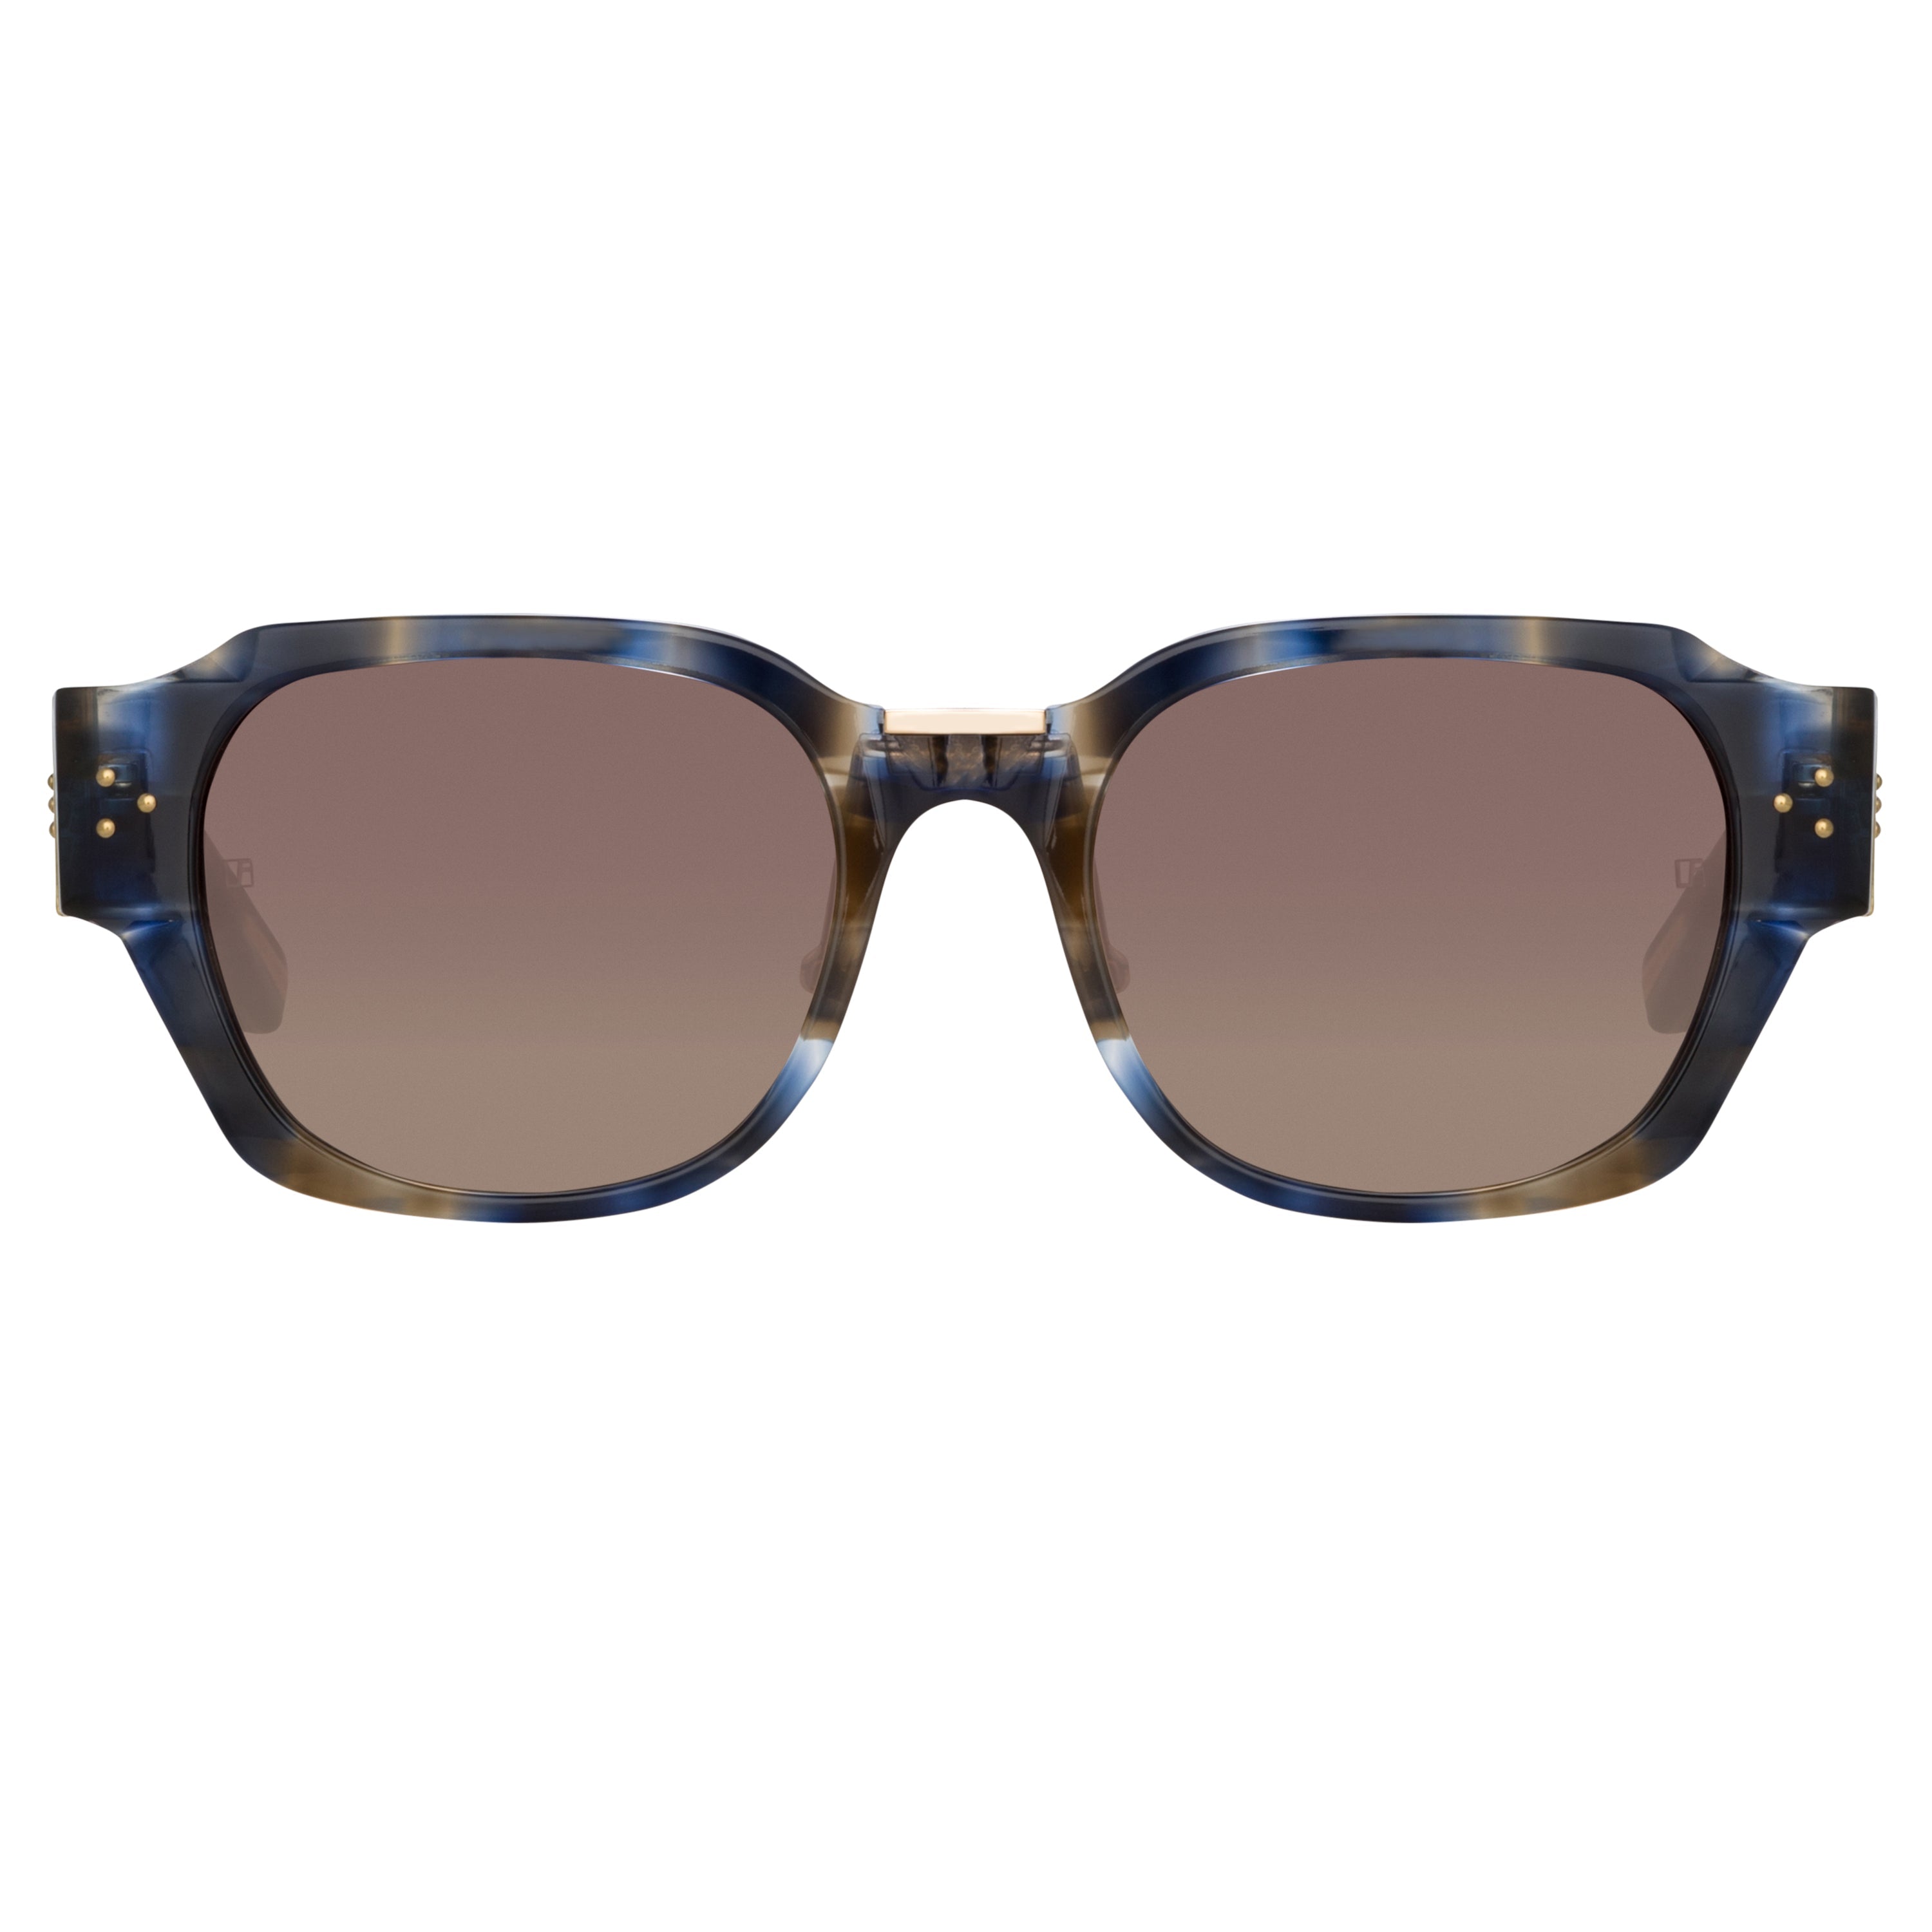 Color_LFL1270C3SUN - Ramon Rectangular Sunglasses in Blue Tortoiseshell